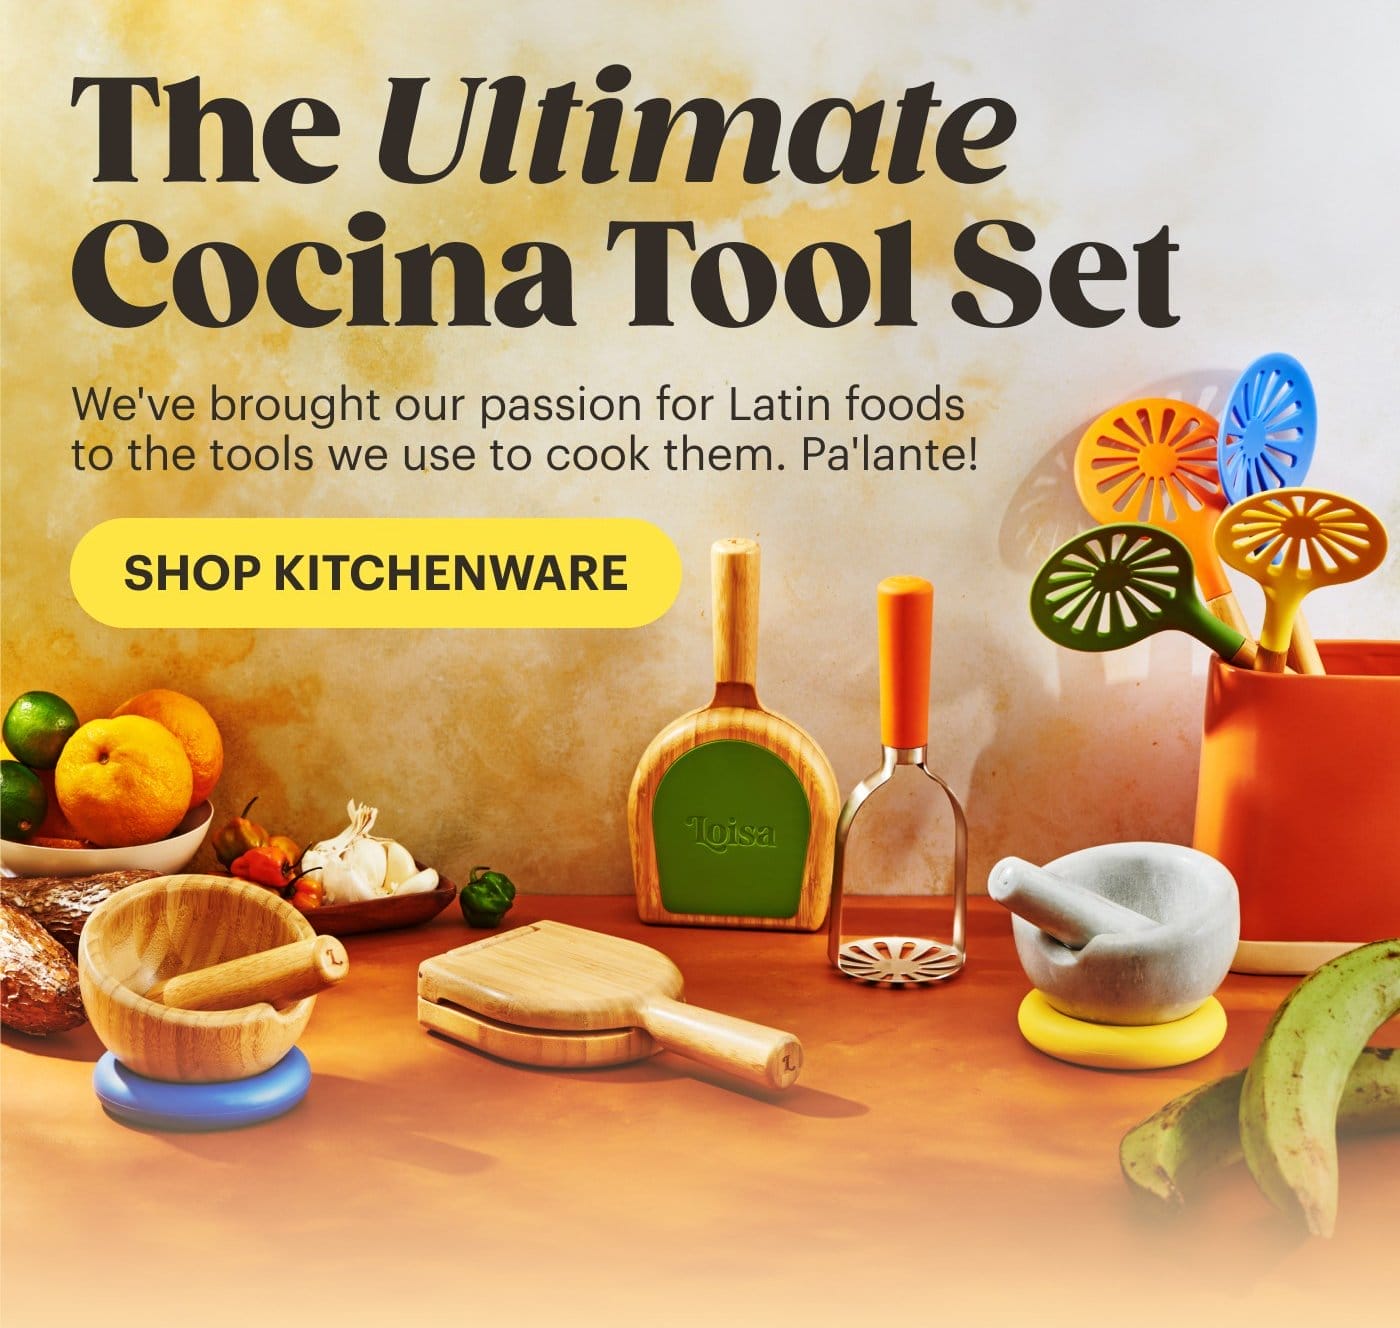 The Ultimate Cocina Tool Set SHOP KITCHENWARE